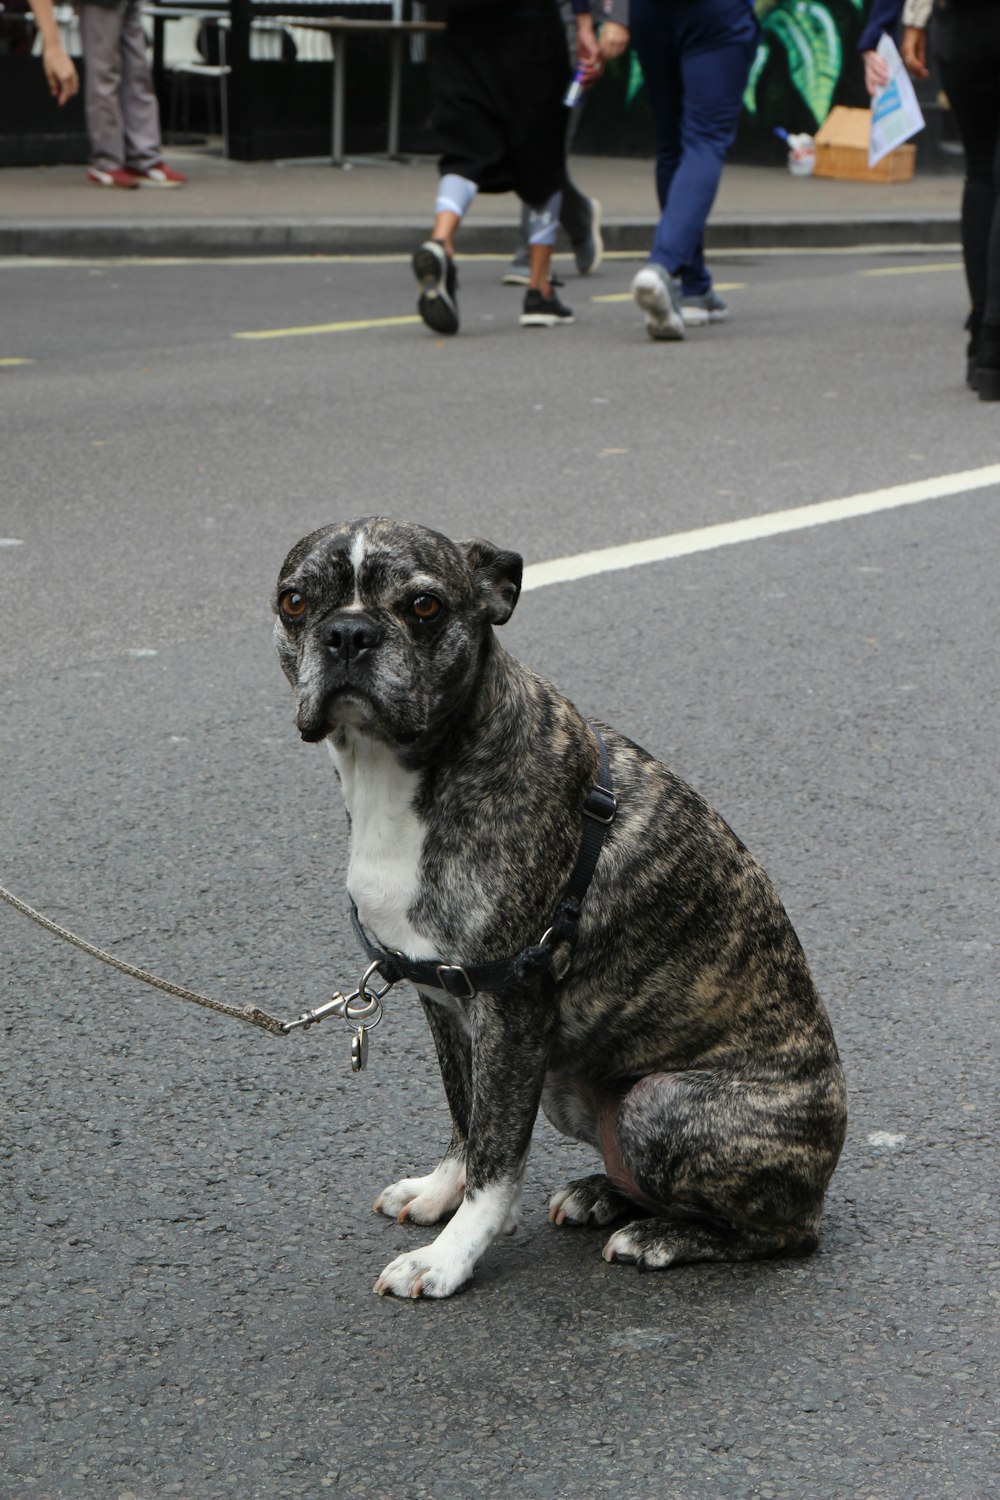 brown and white short coated dog on gray asphalt road